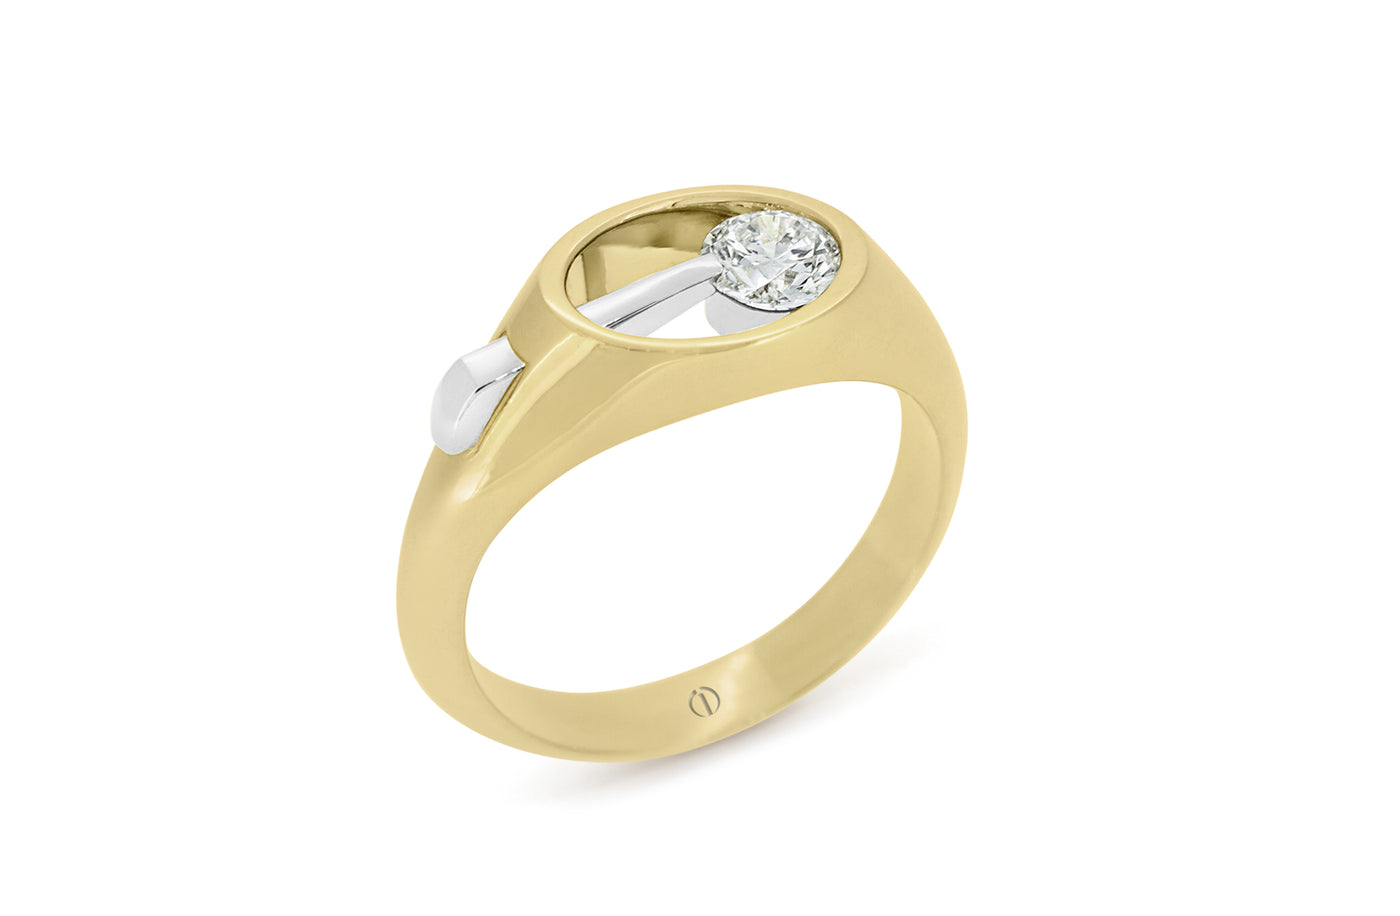 Inspired Collection, Breta, engagement Ring, 18ct, 18k, yellow gold, white gold, jewellery, jewelry, round diamond, half rub setting, claw set, brilliant diamond, round cut